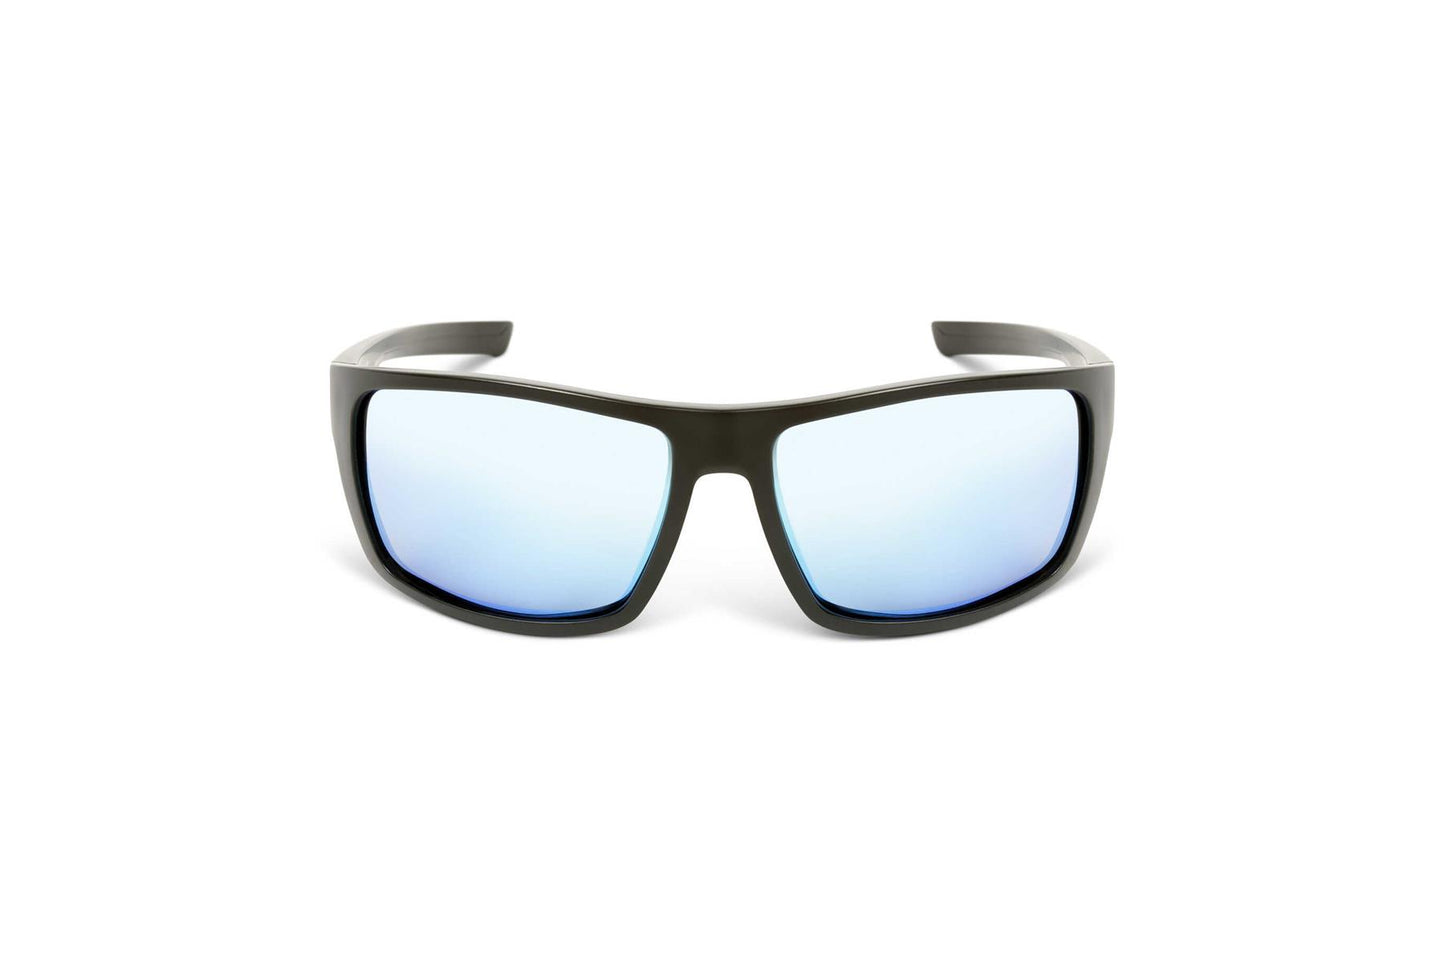 Preston Inception Wrap Sunglasses - Ice Blue Lens